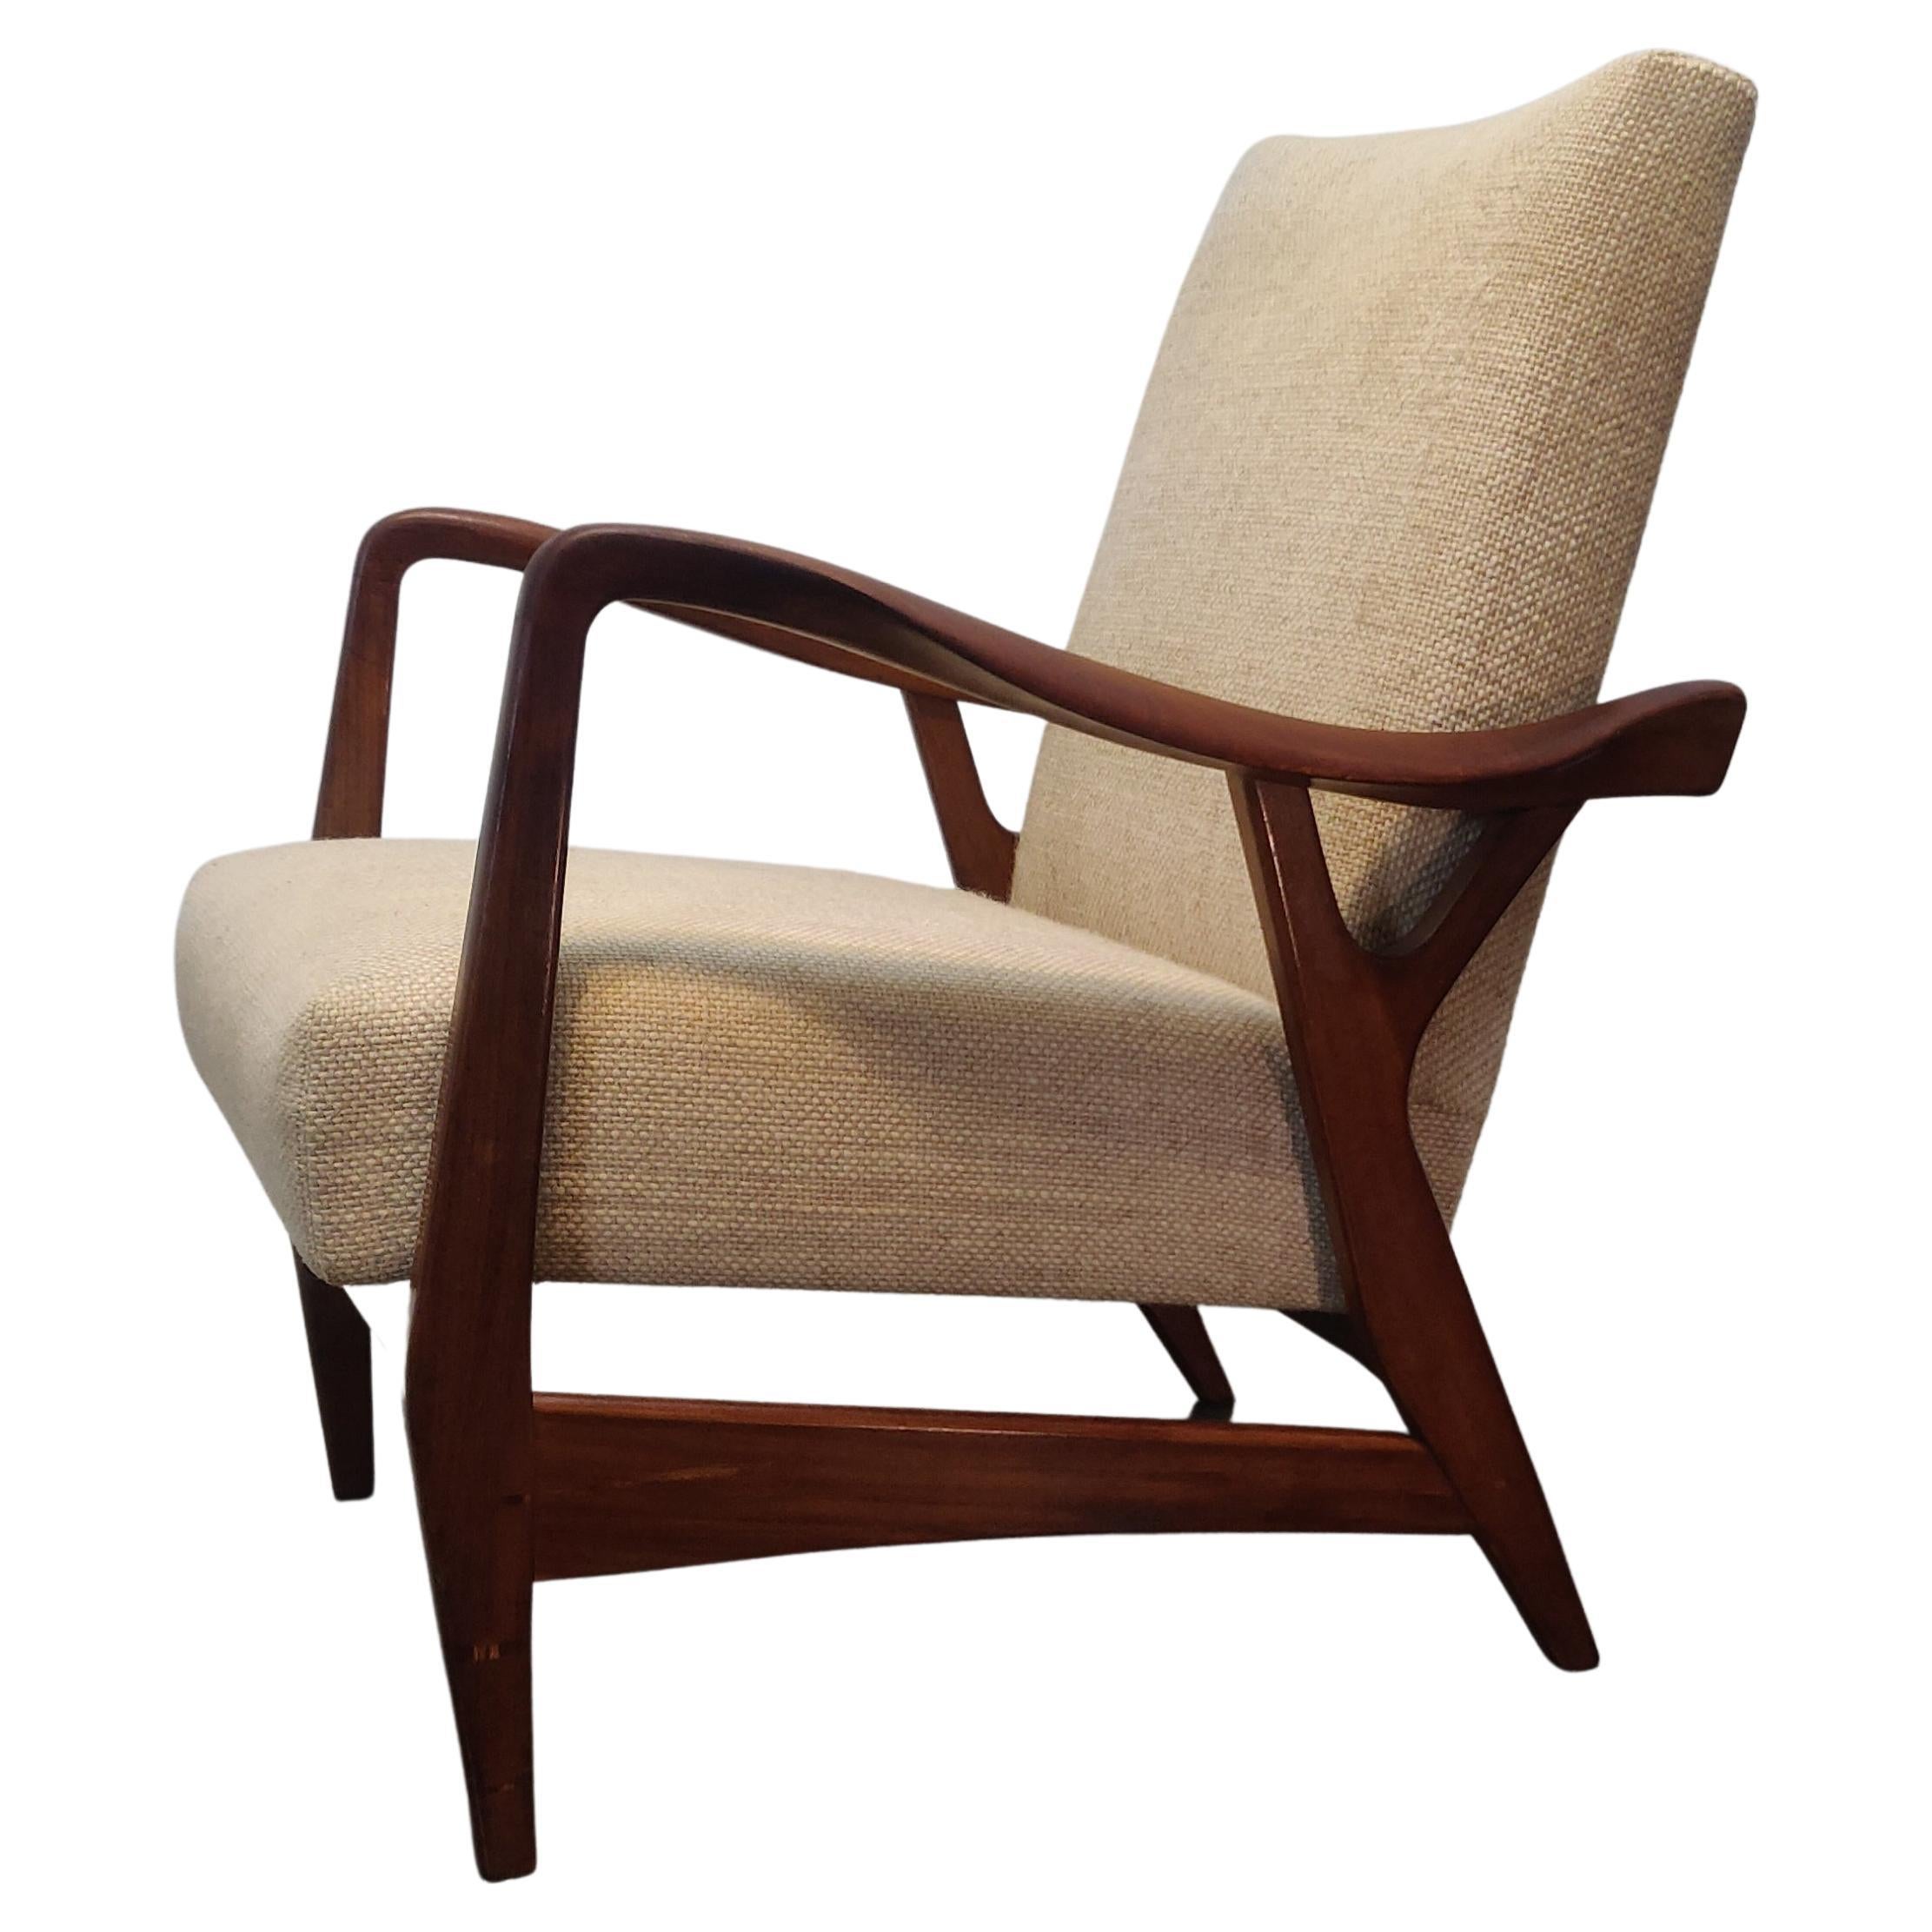 Organic Shaped Massive Teak Lounge Chair by Topform, 1950s For Sale